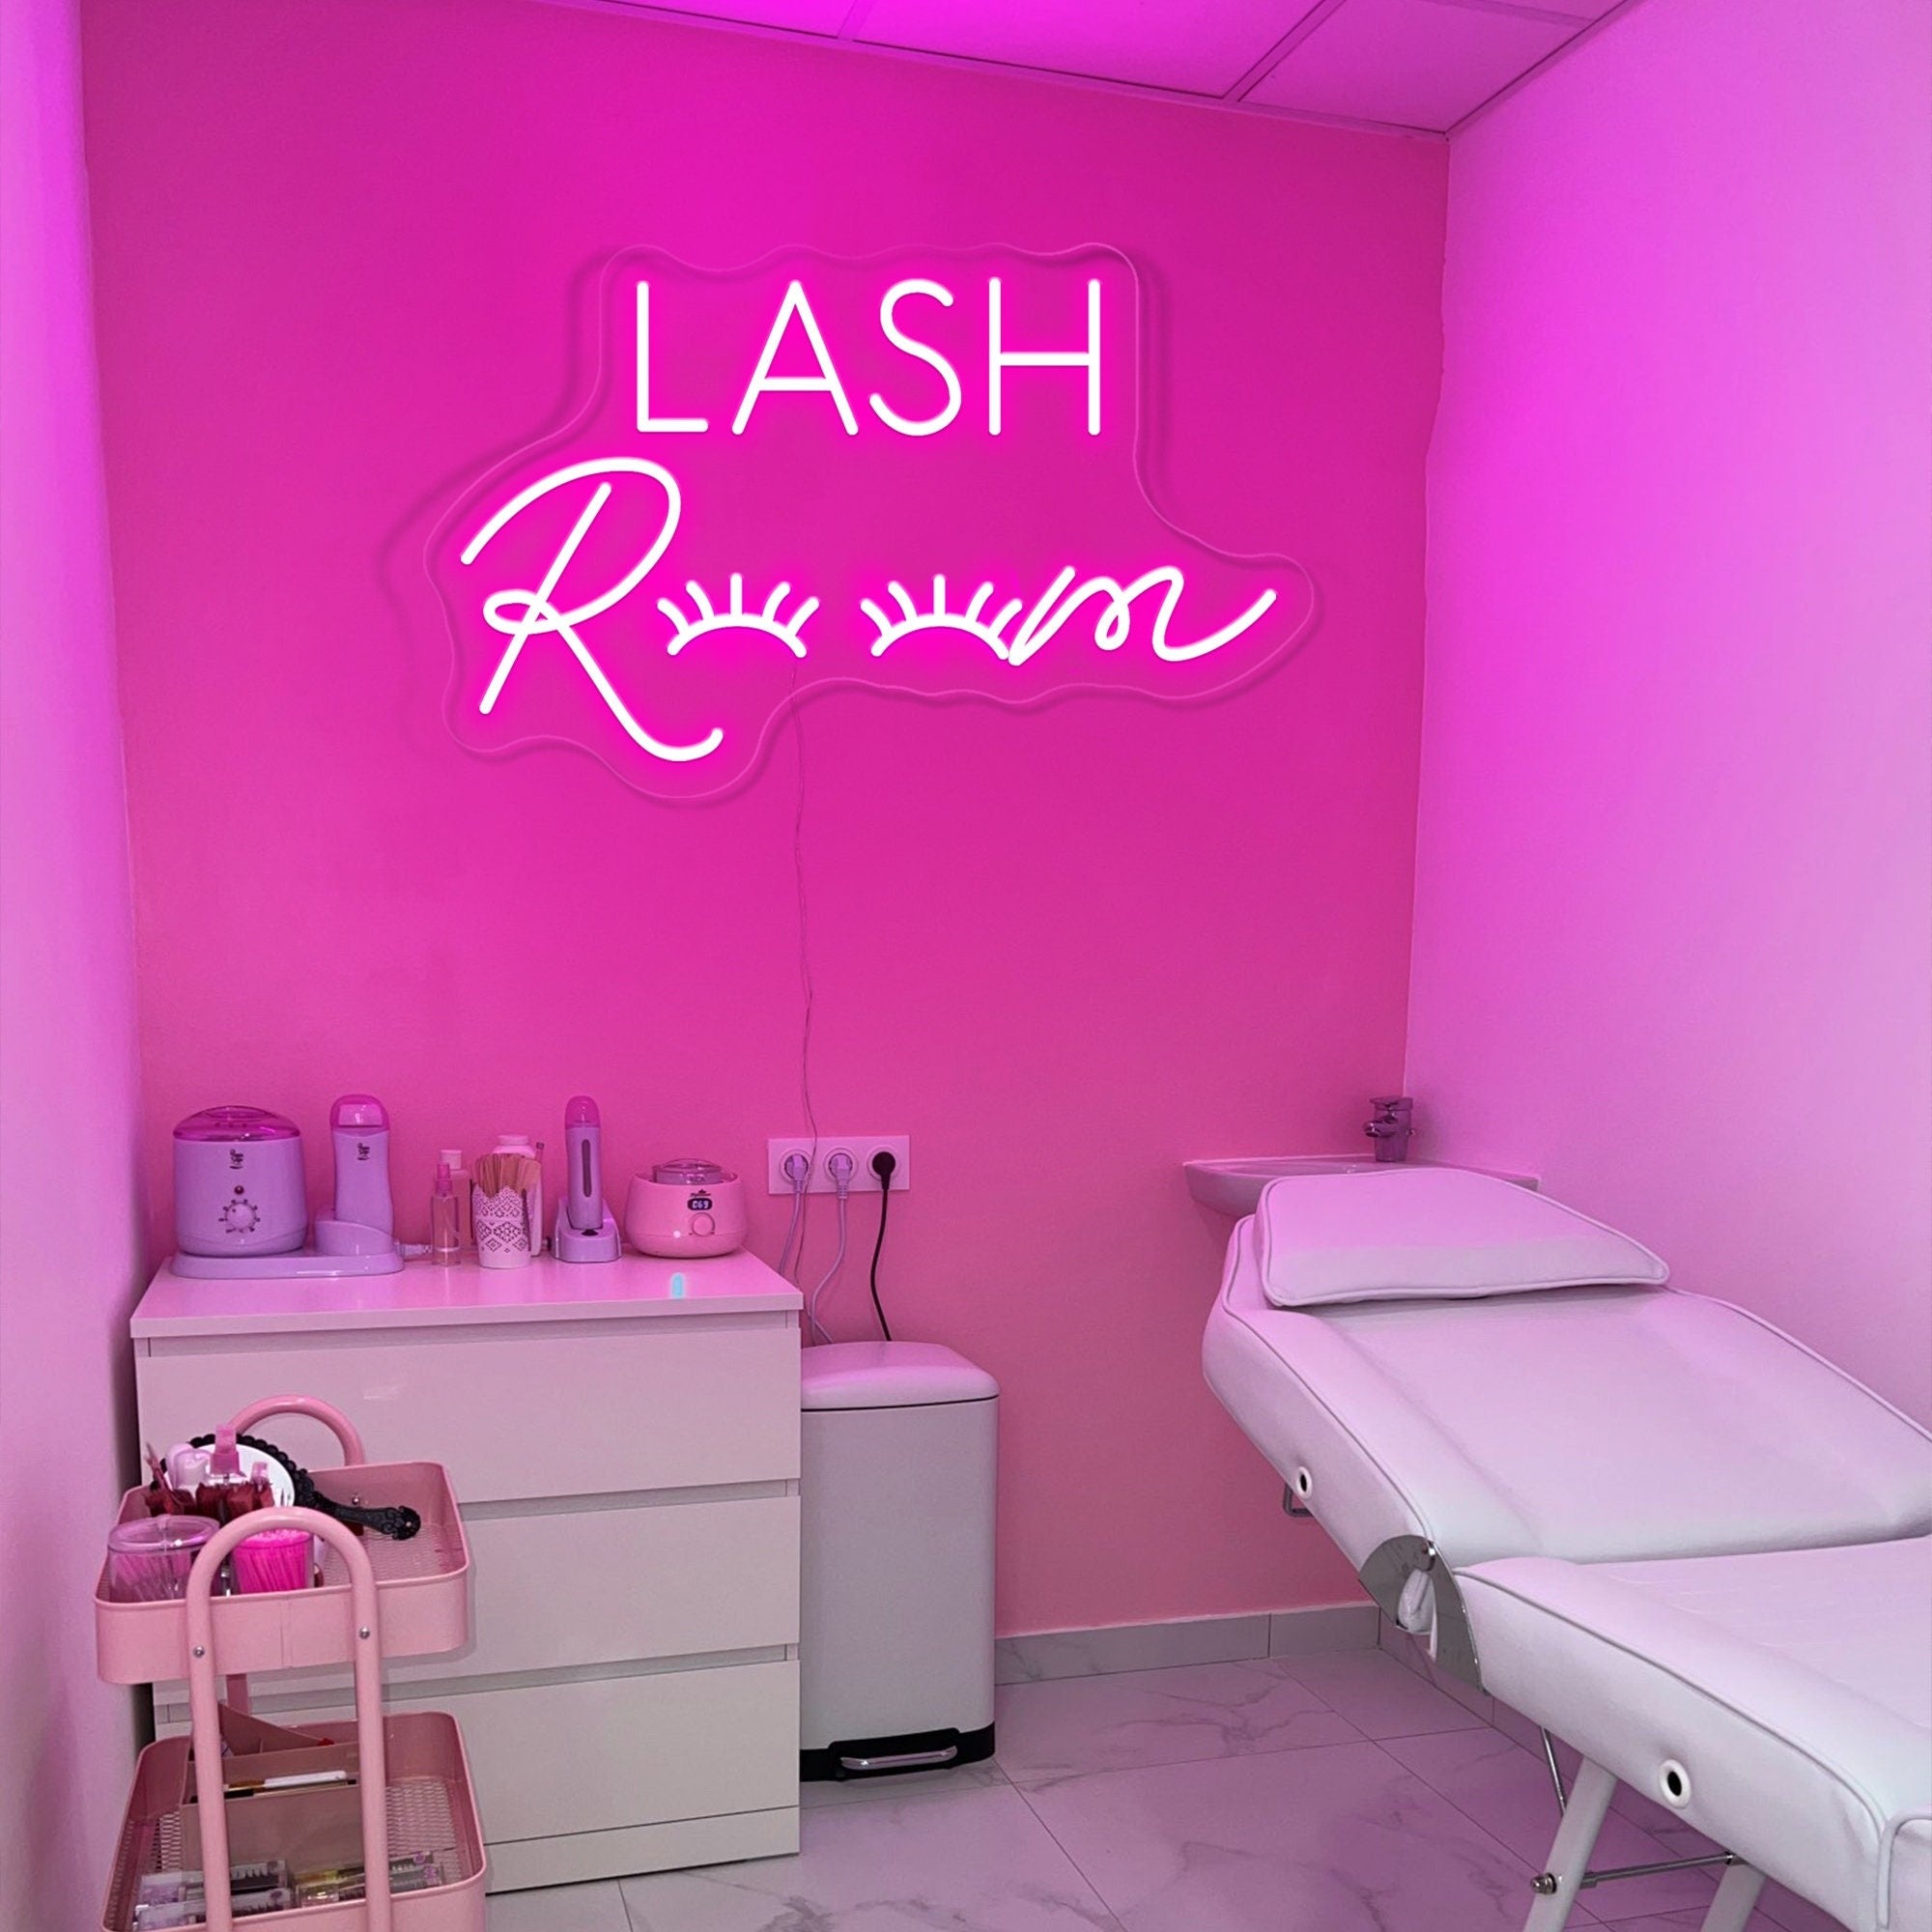  "Lash room" LED neon sign